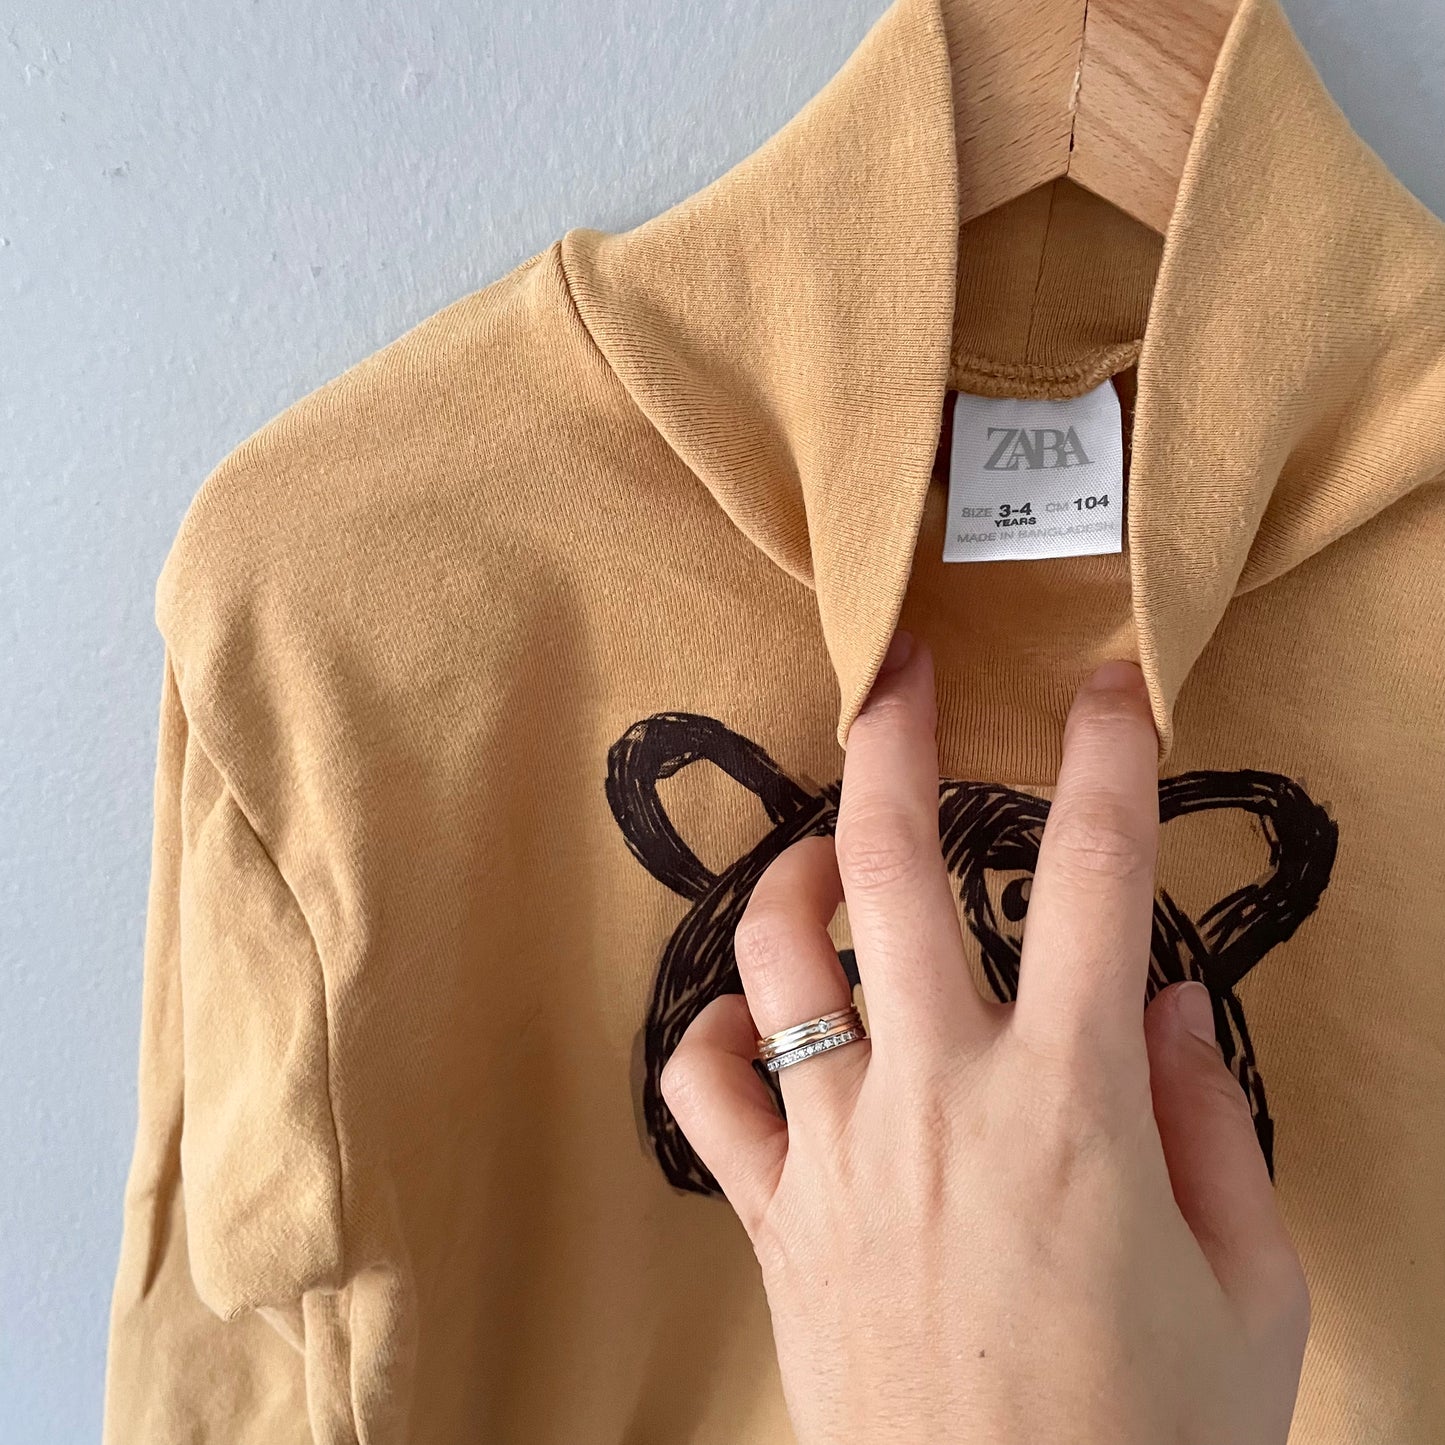 Zara / Turtle neck top - Bear print, Mustard / 3-4Y